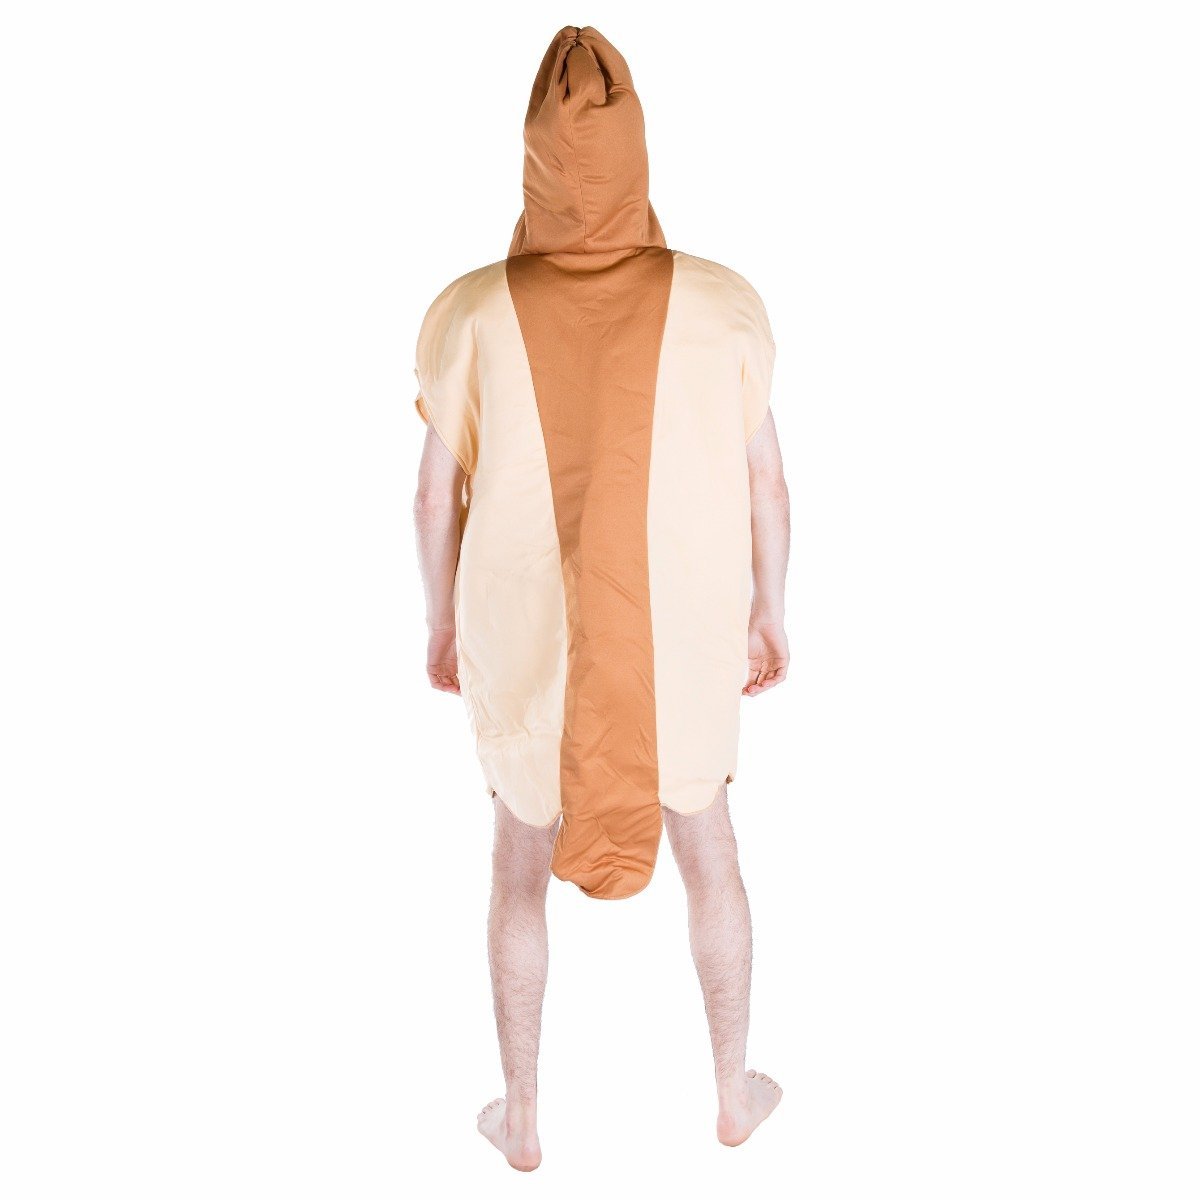 Bodysocks - Hot Dog Costume